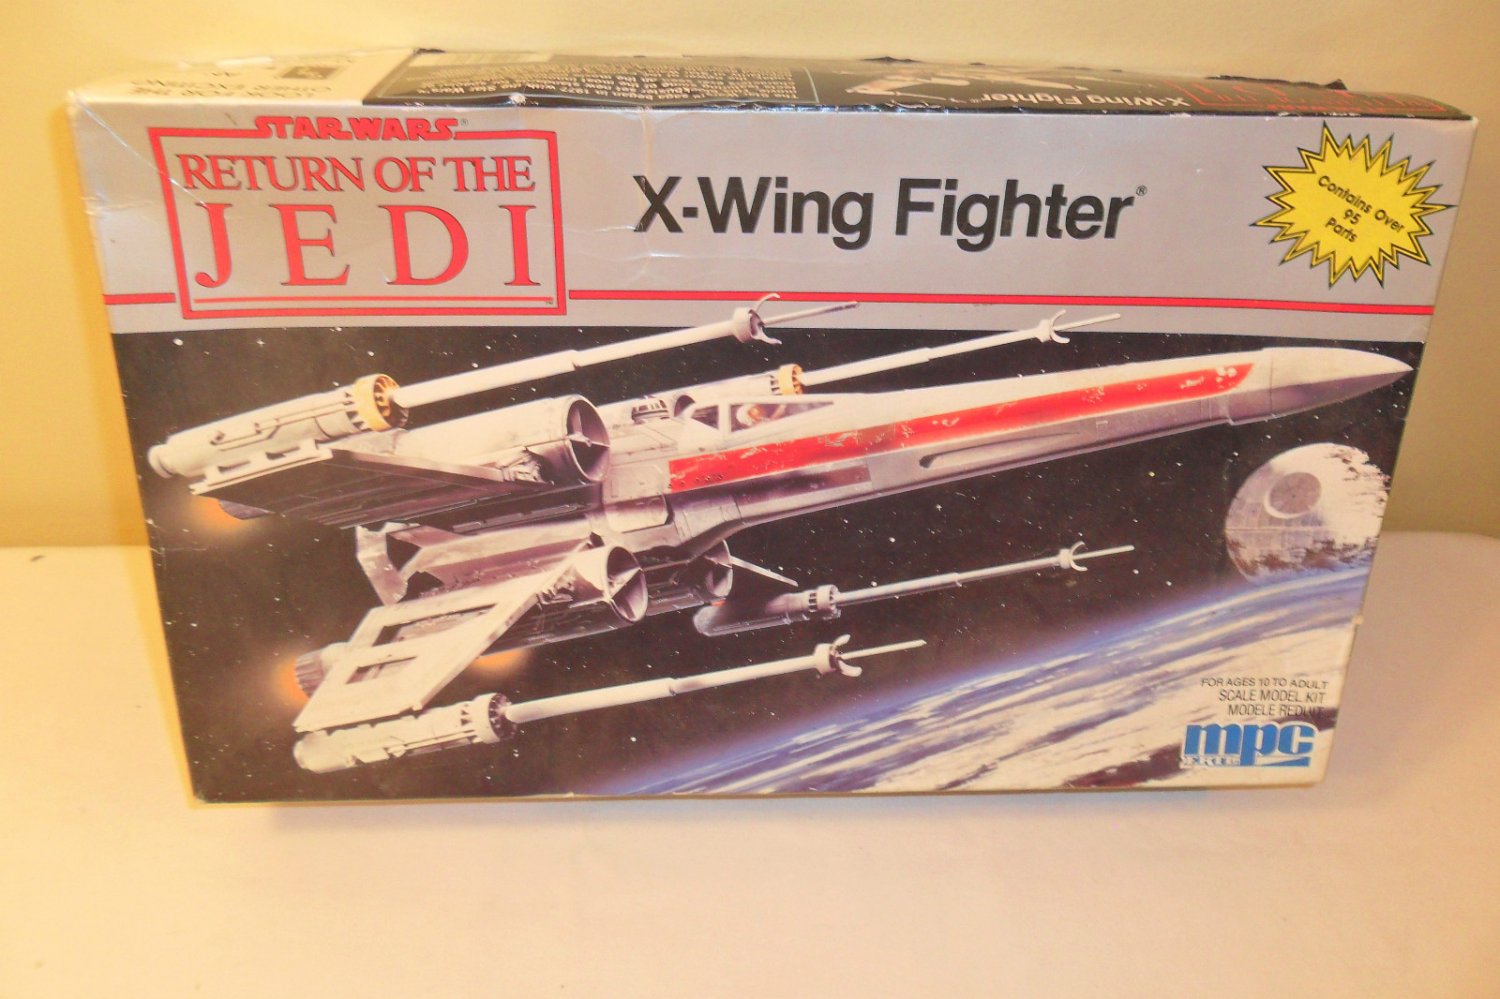 1983 Star Wars Return of the Jedi X-Wing Fighter Original Vintage Model Kit